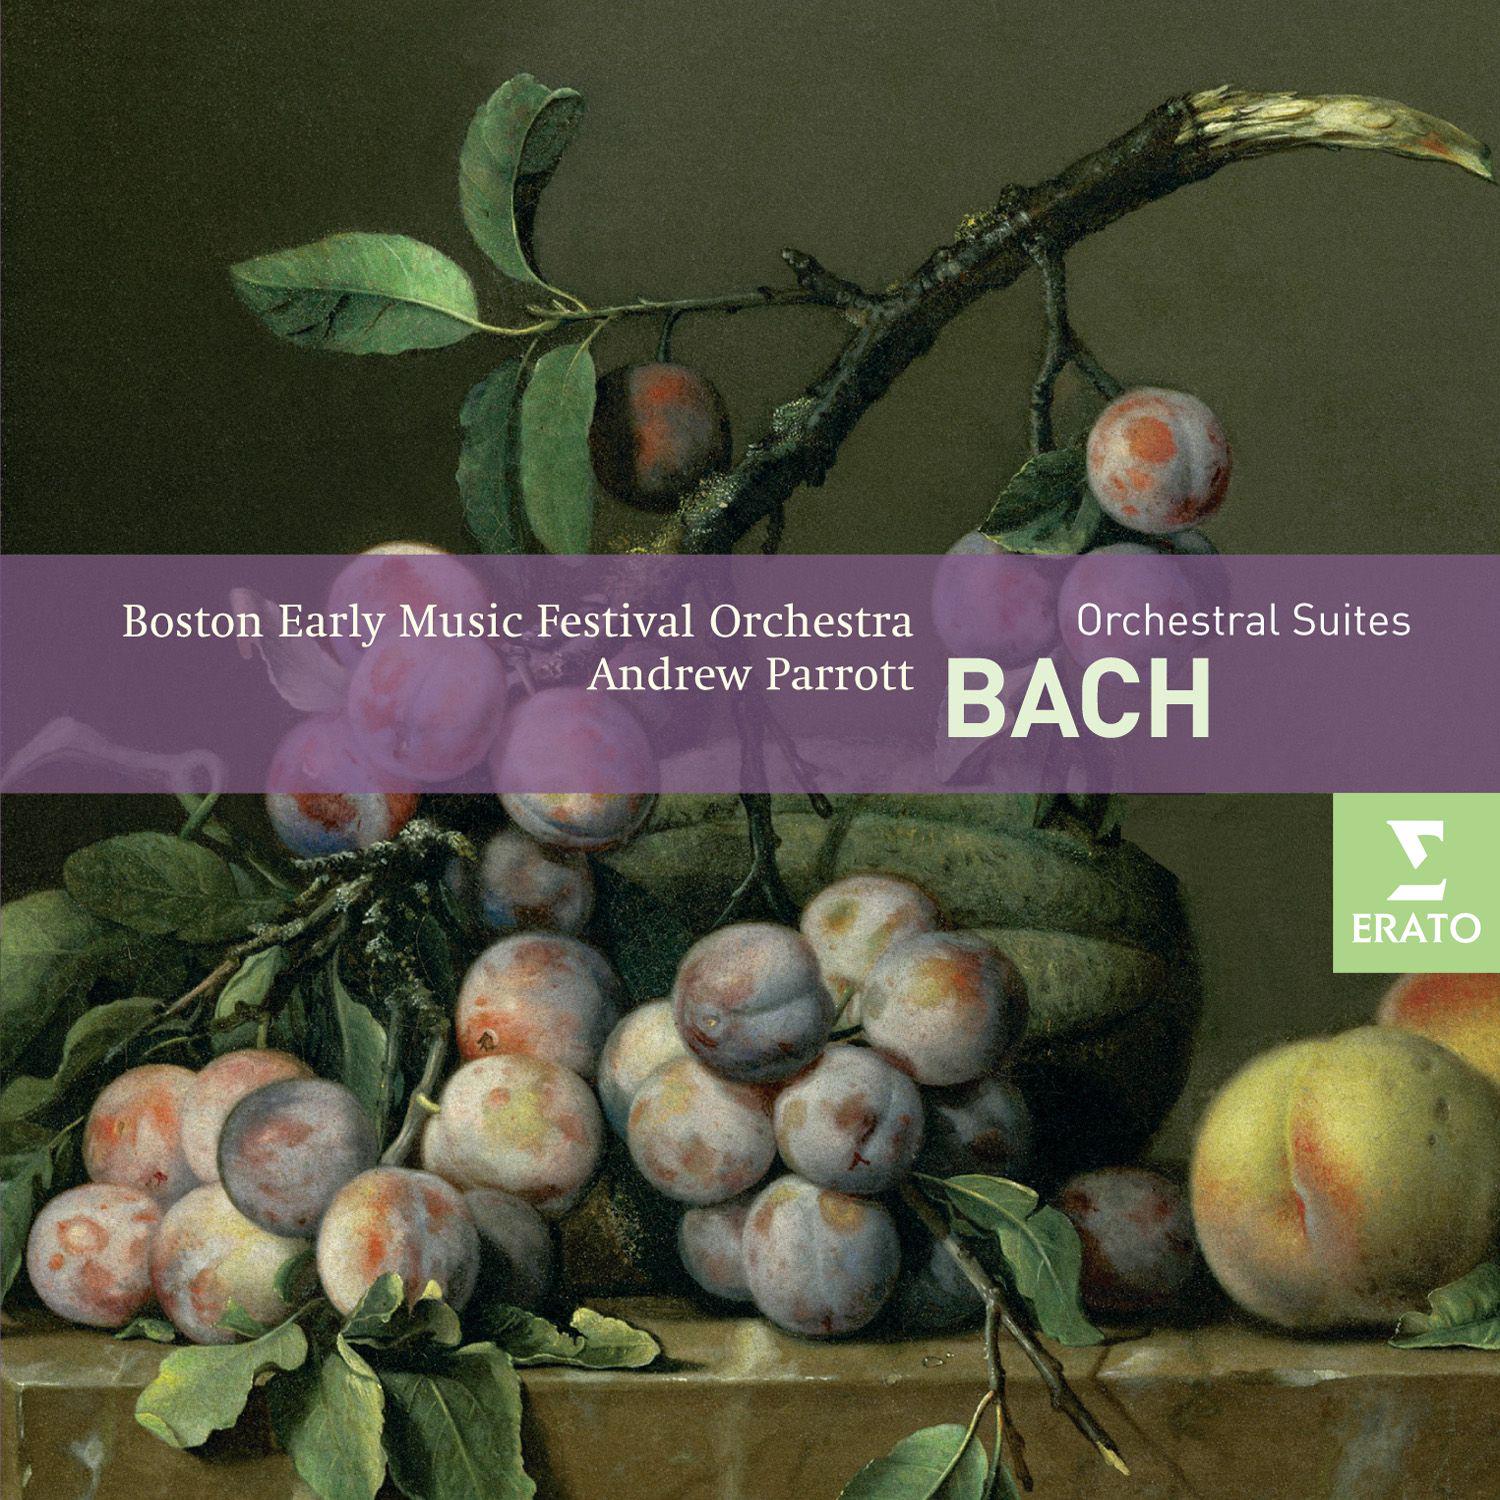 Orchestral Suite No. 3 in D Major, BWV 1068: IV. Bourre e